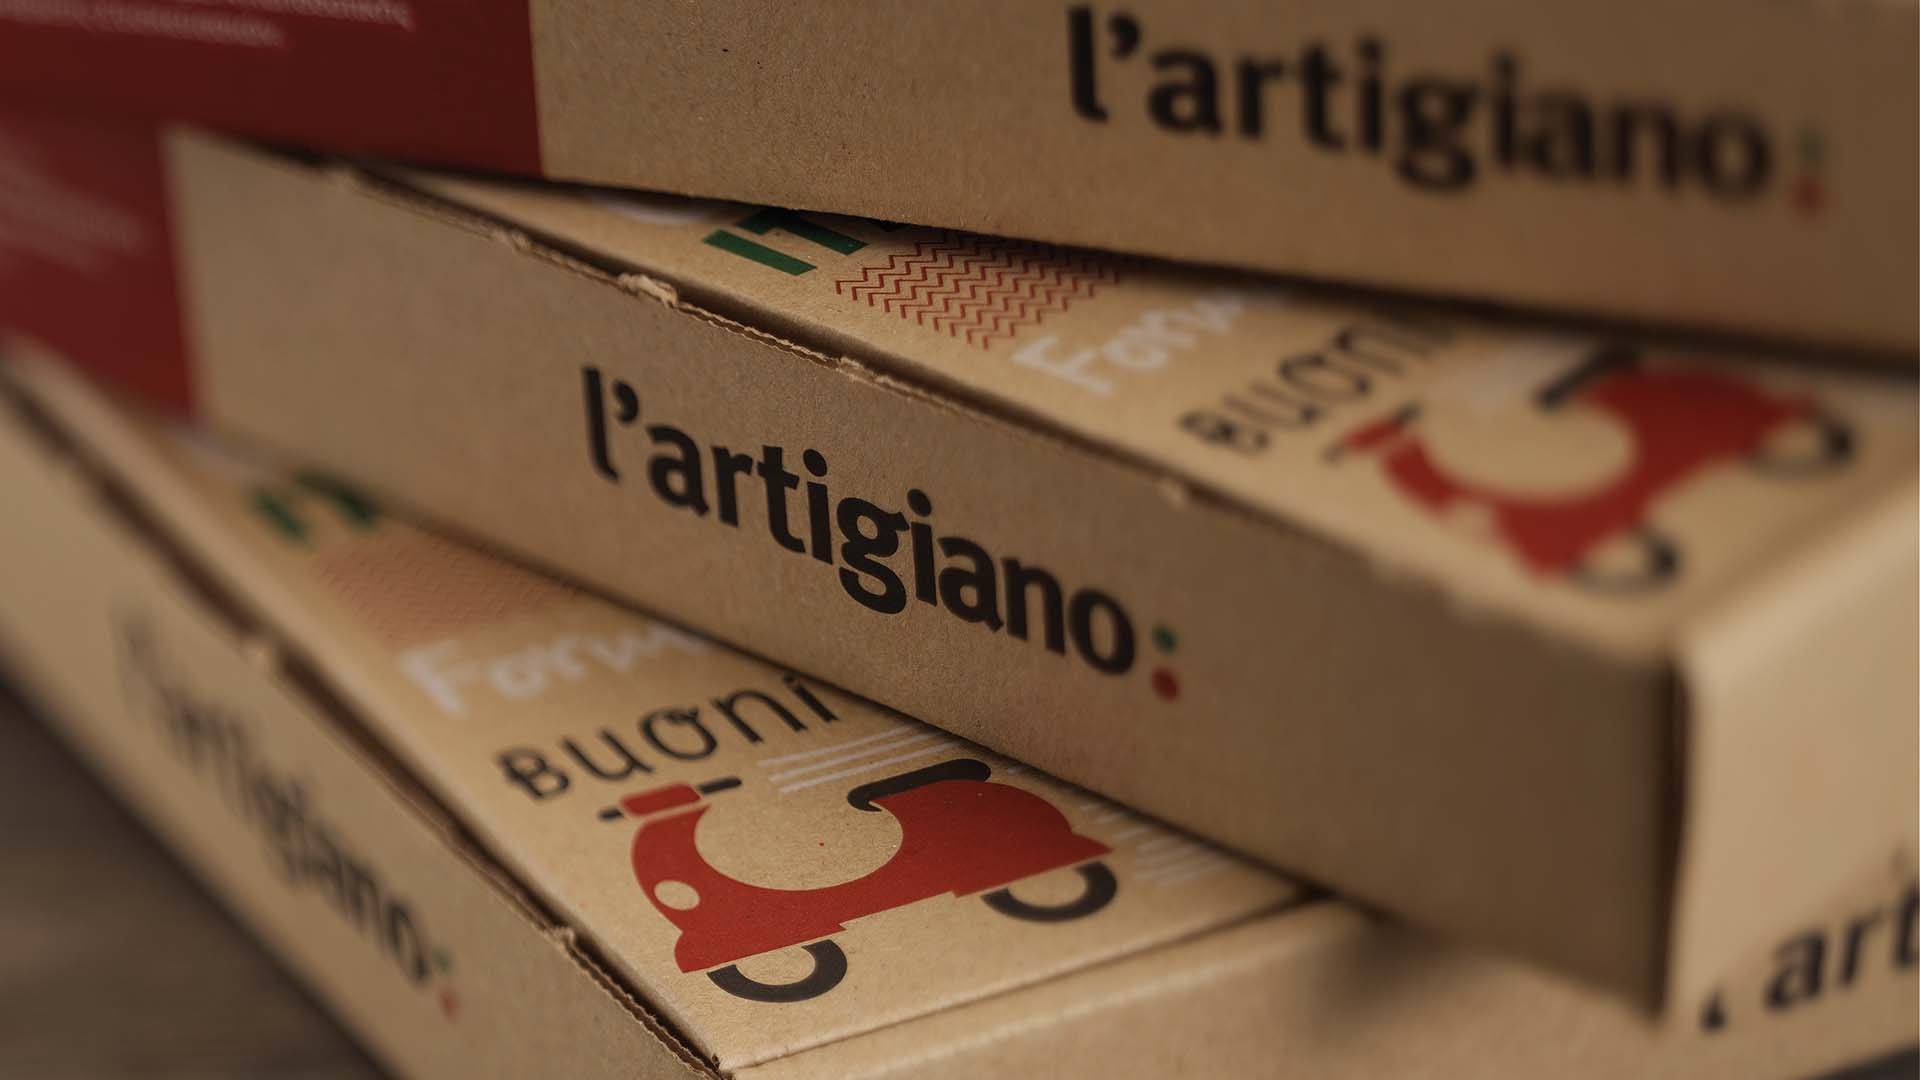 L' artigiano logo on pizza boxes